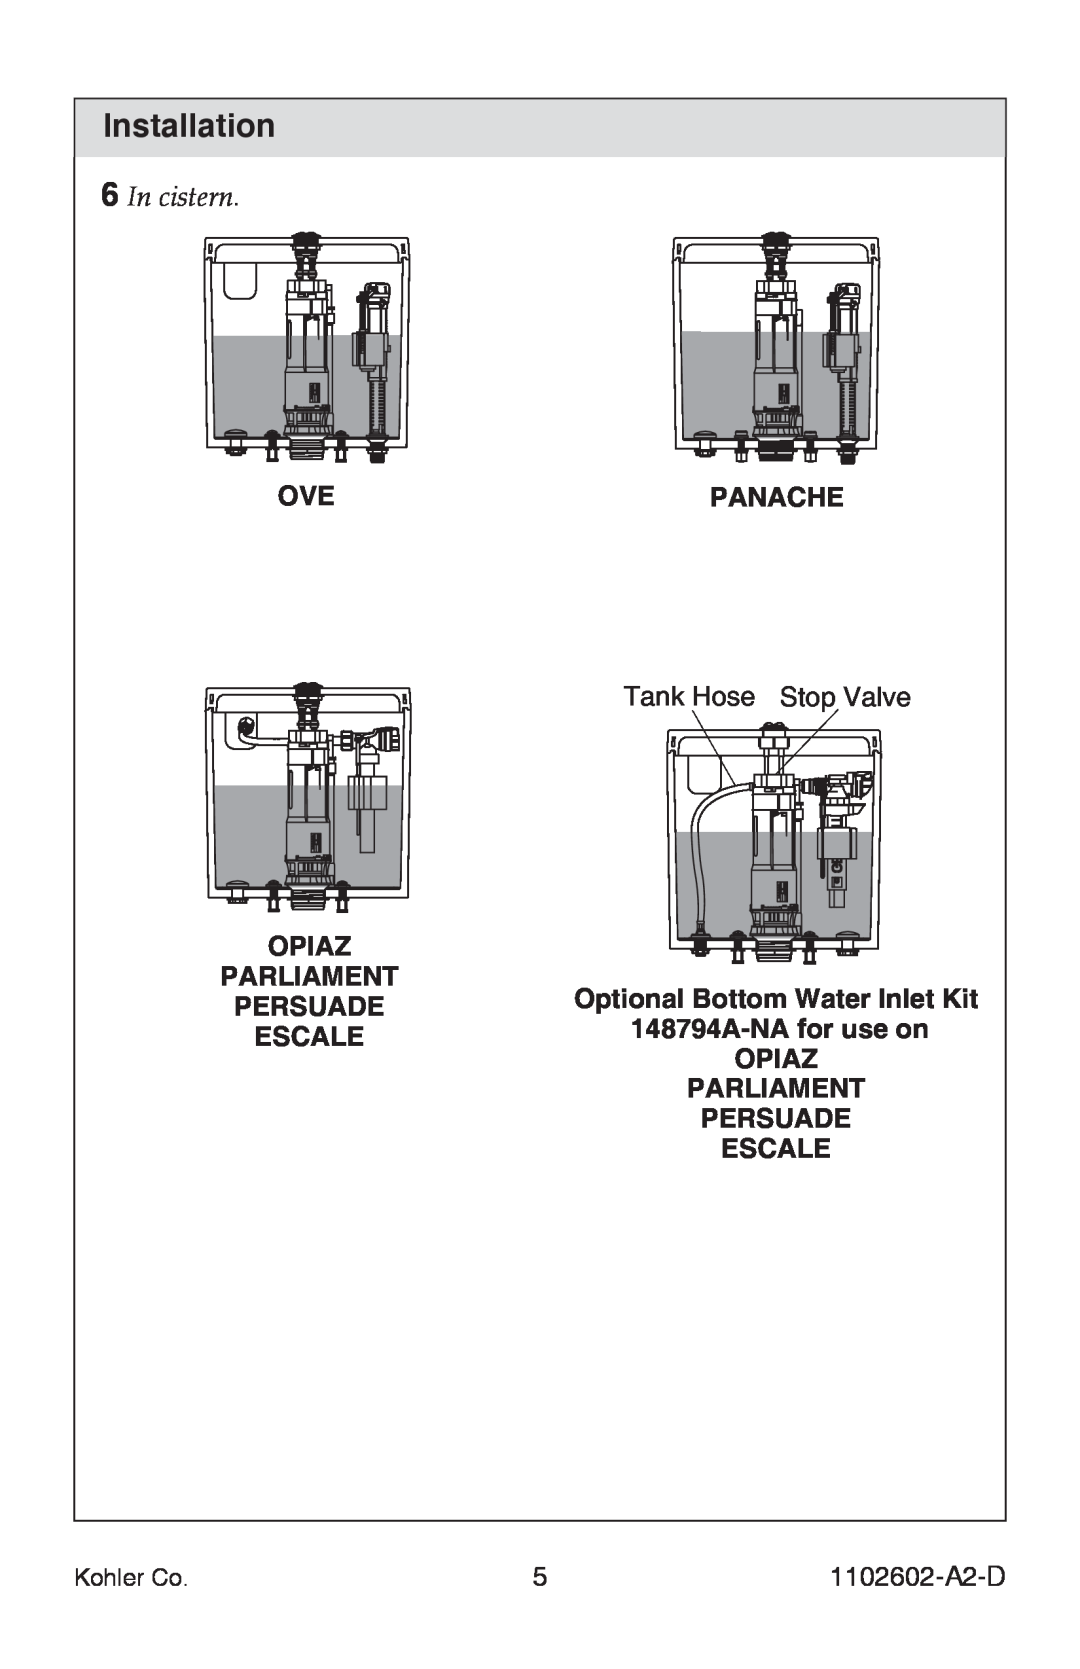 Kohler 1102602-A2-D manual In cistern, Installation, Panache 